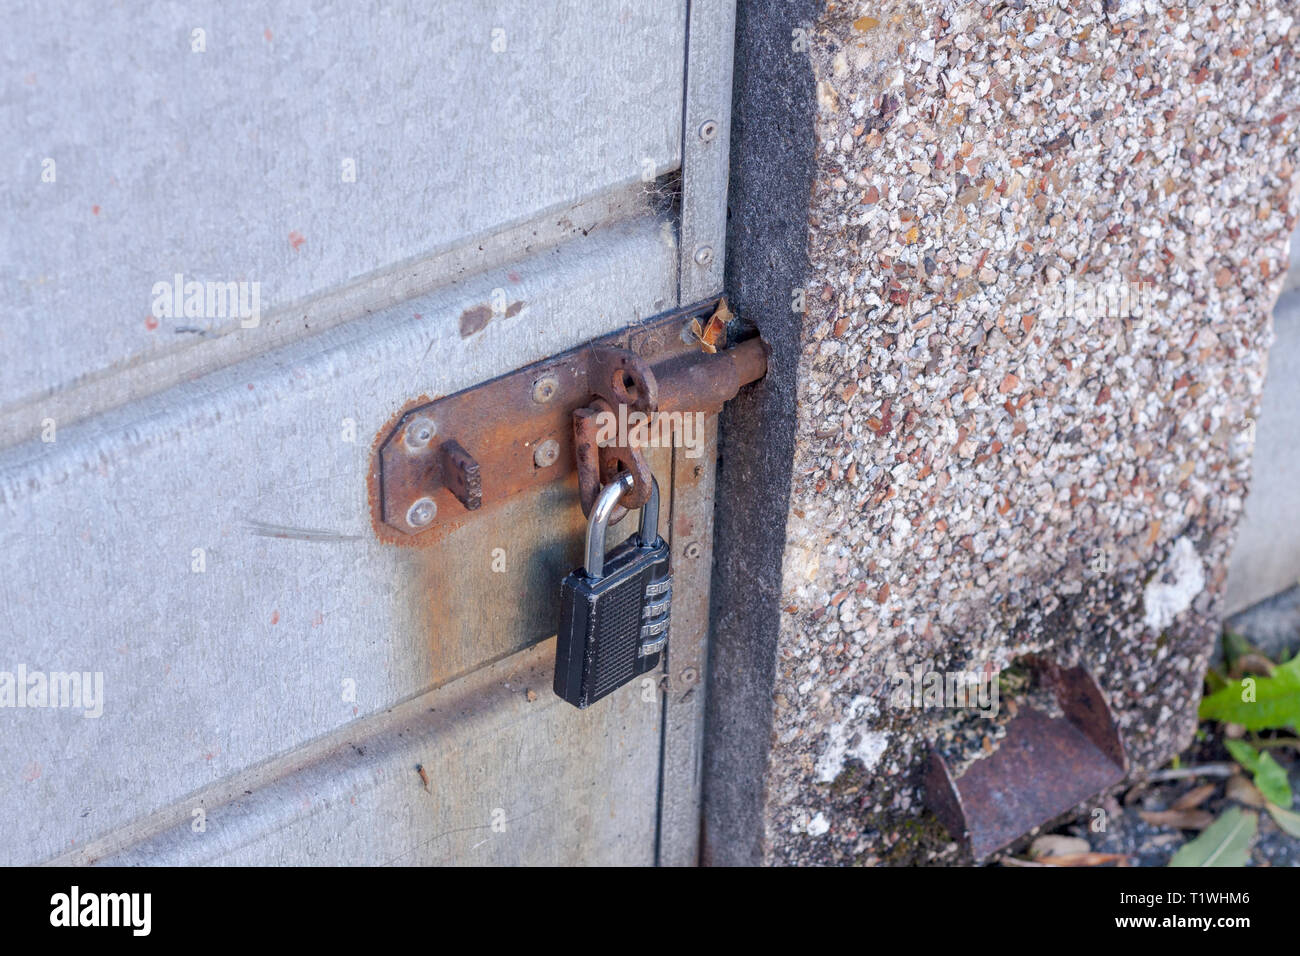 Close-up of a combination padlock on a garage door Stock Photo